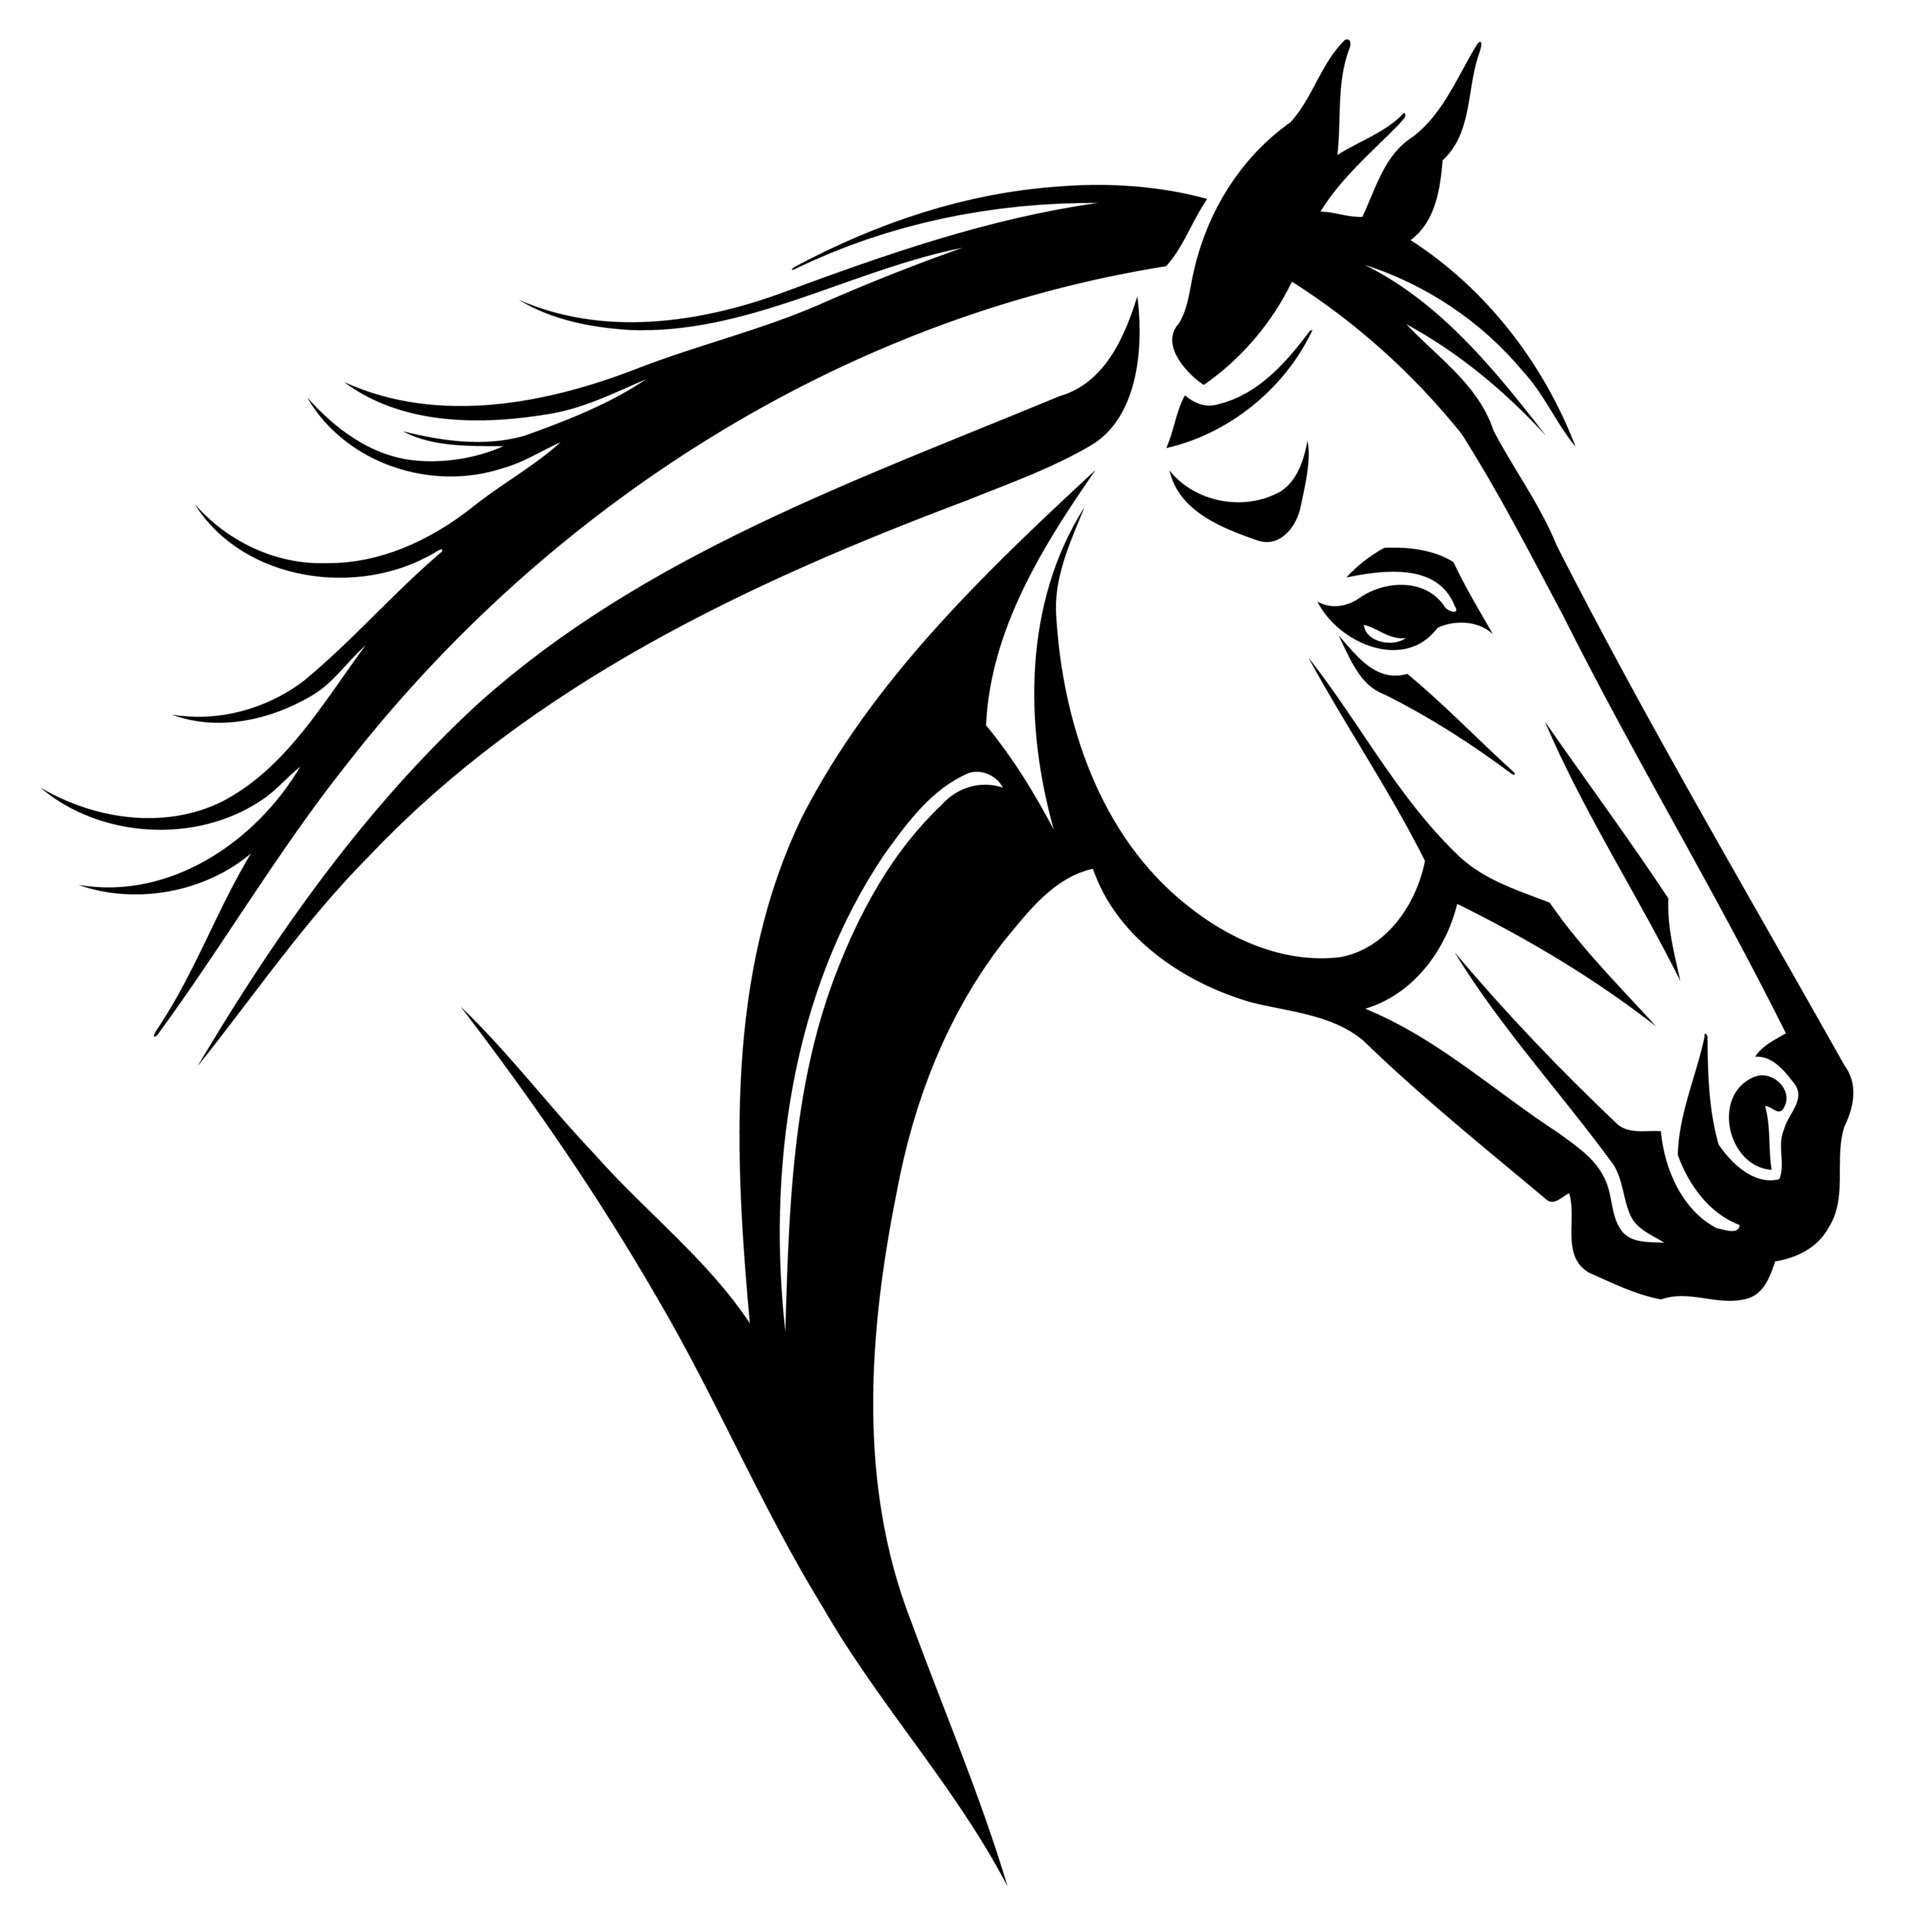 Cavalo Cabeça Animal - Gráfico vetorial grátis no Pixabay - Pixabay